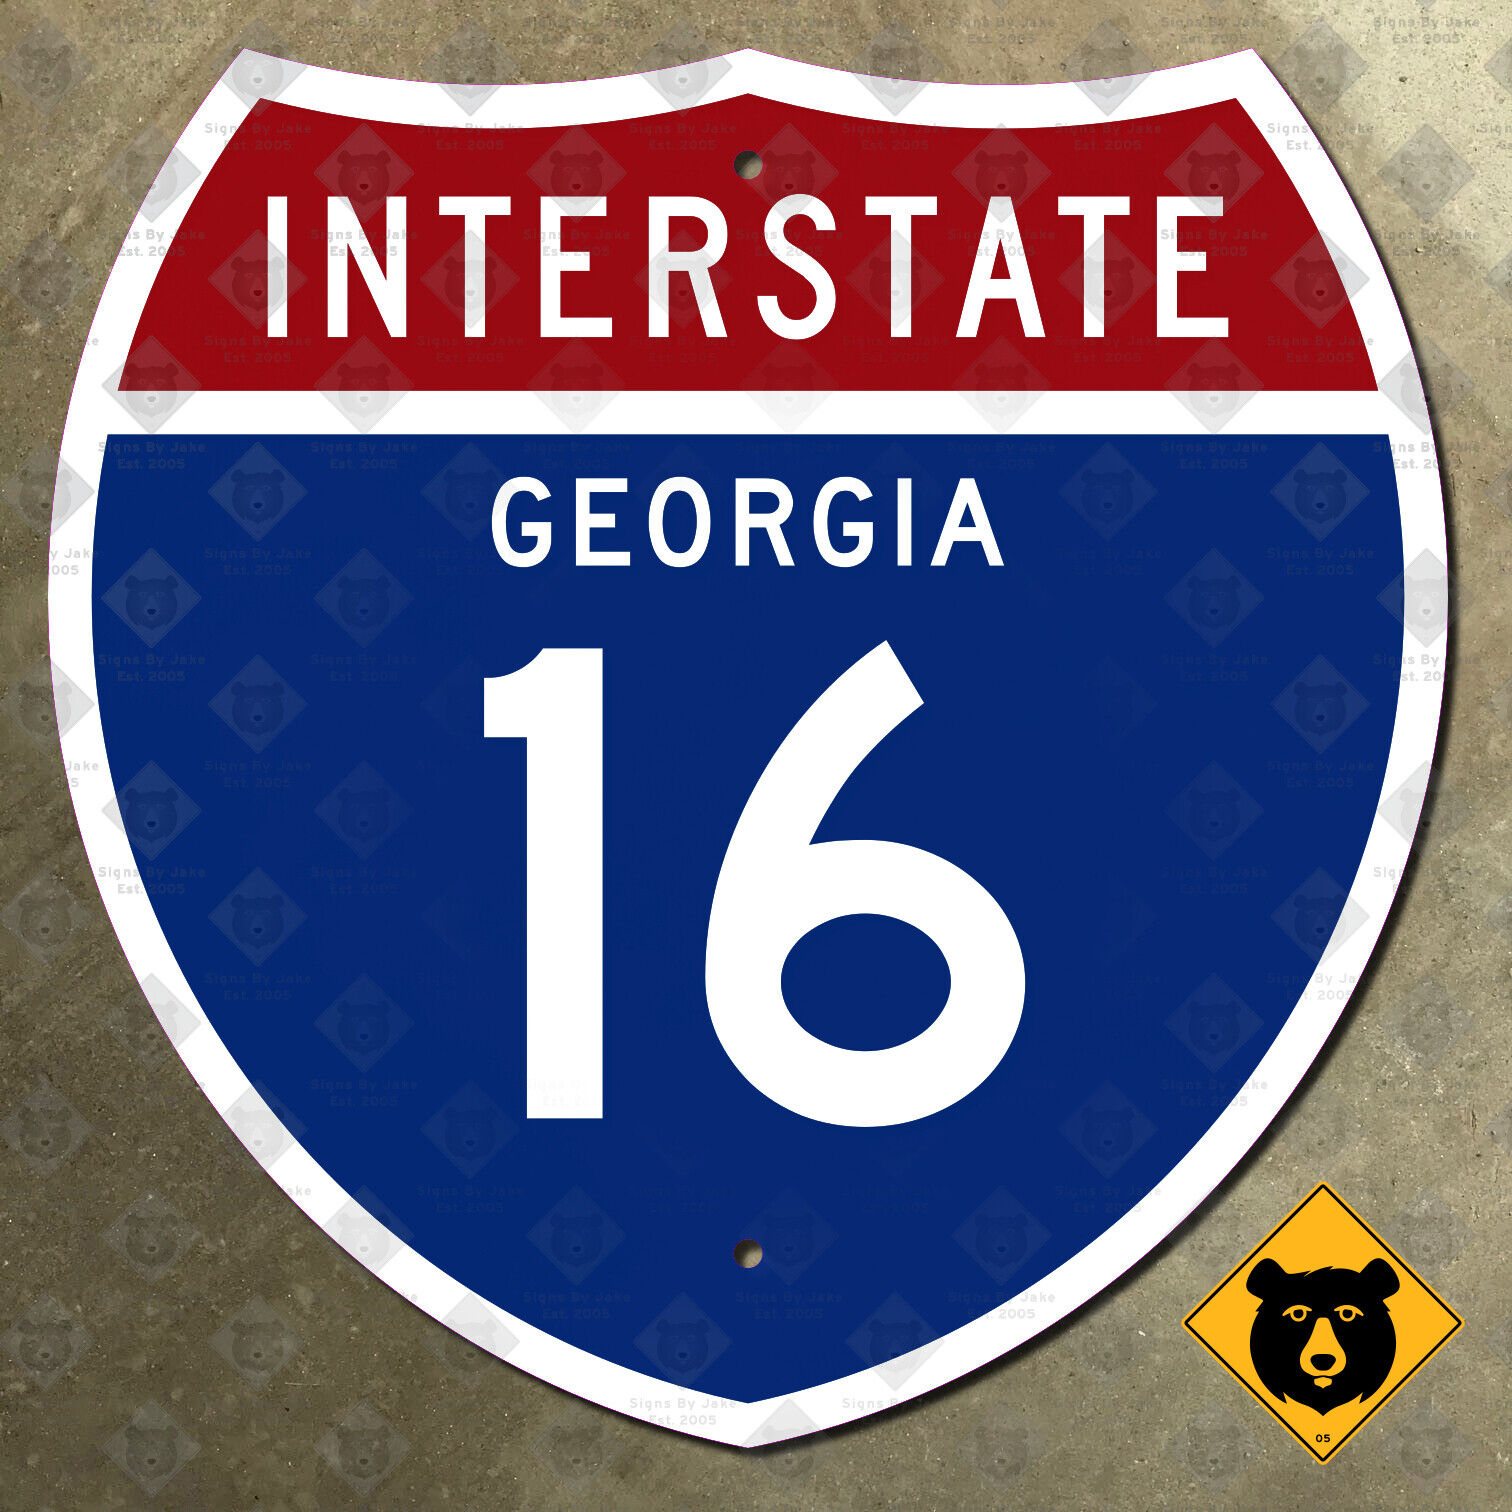 Georgia Interstate 16 route marker highway 1957 road sign Macon Savannah 18x18